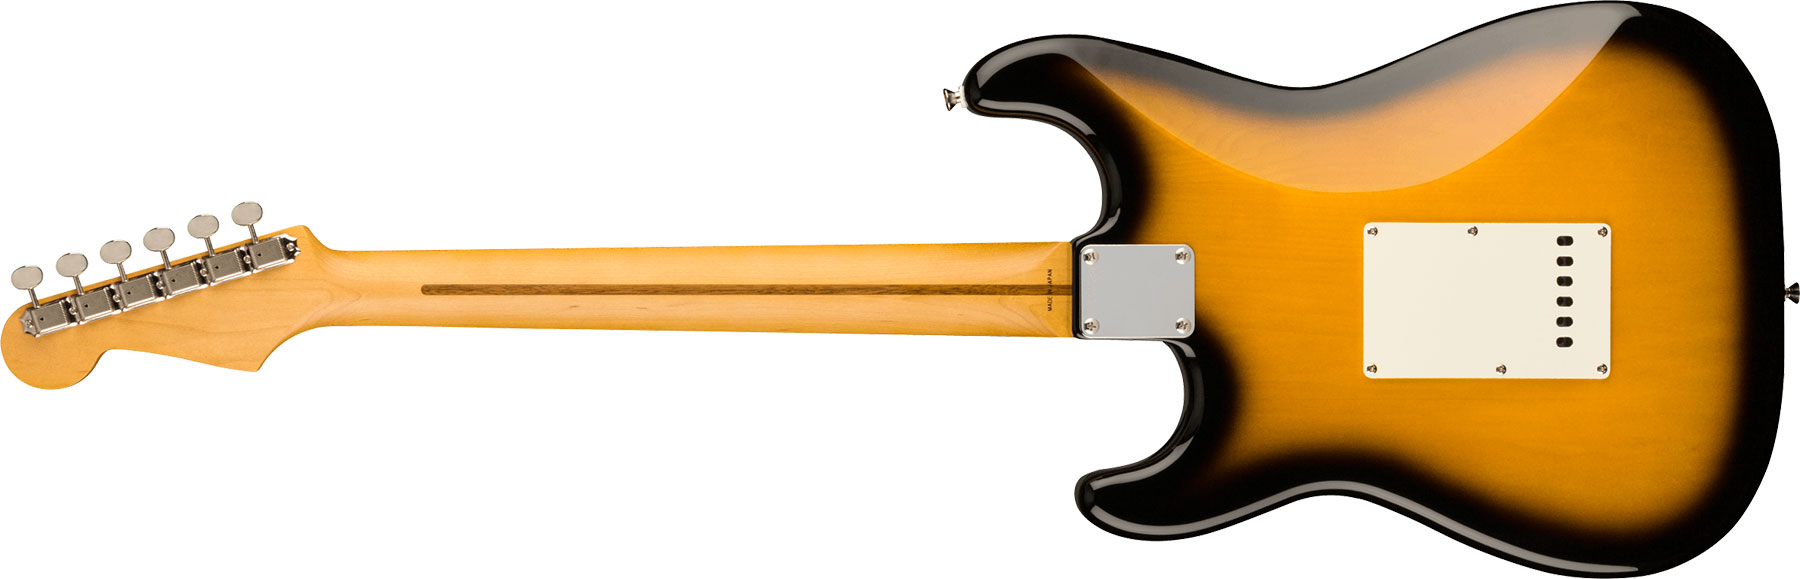 Fender Strat Jv Modified '50s Jap Hss Trem Mn - 2-color Sunburst - Guitarra eléctrica con forma de str. - Variation 1